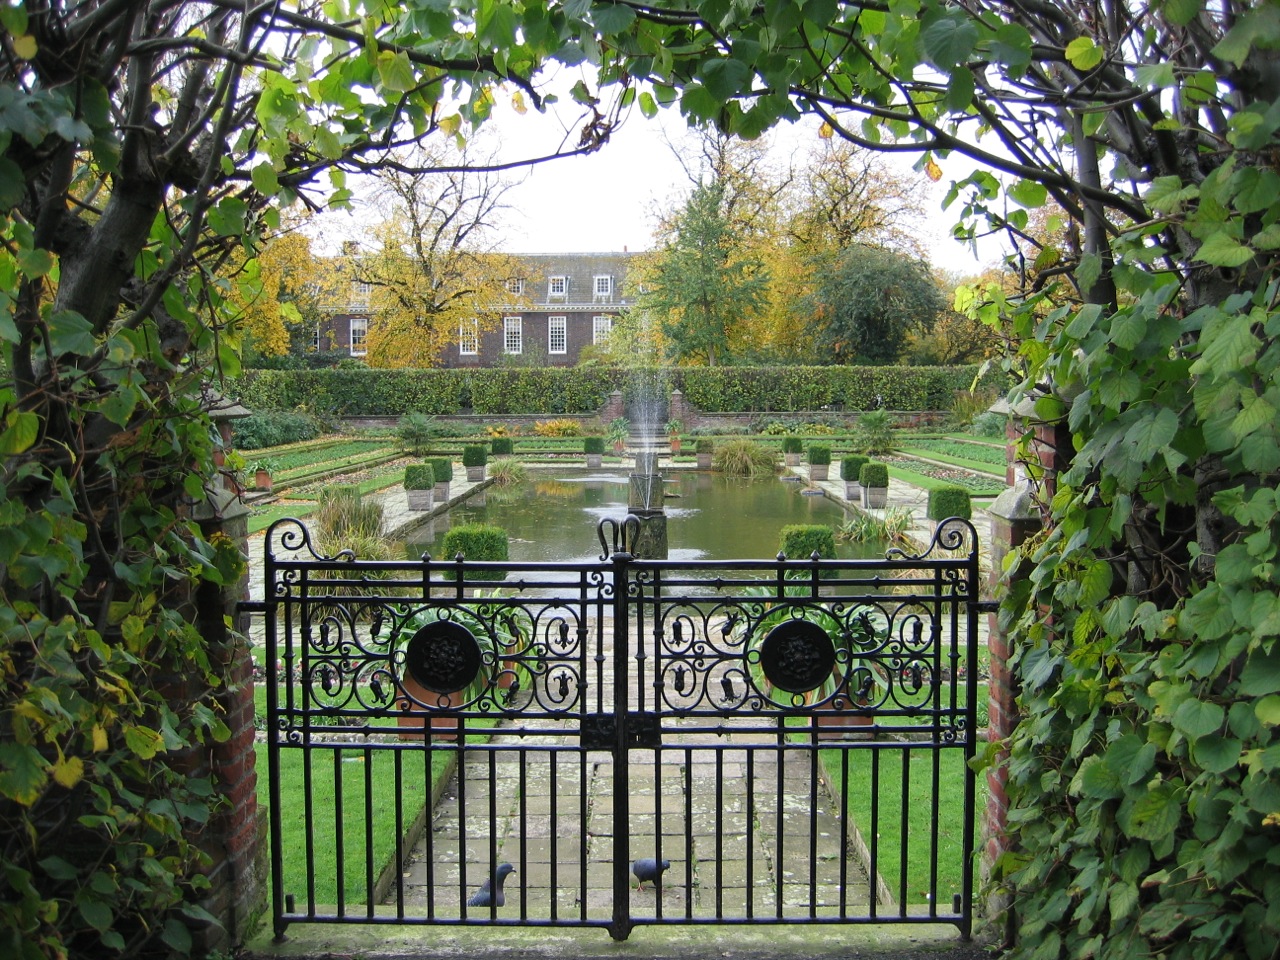  The sunken garden at Kensington Palace, London, UK. 